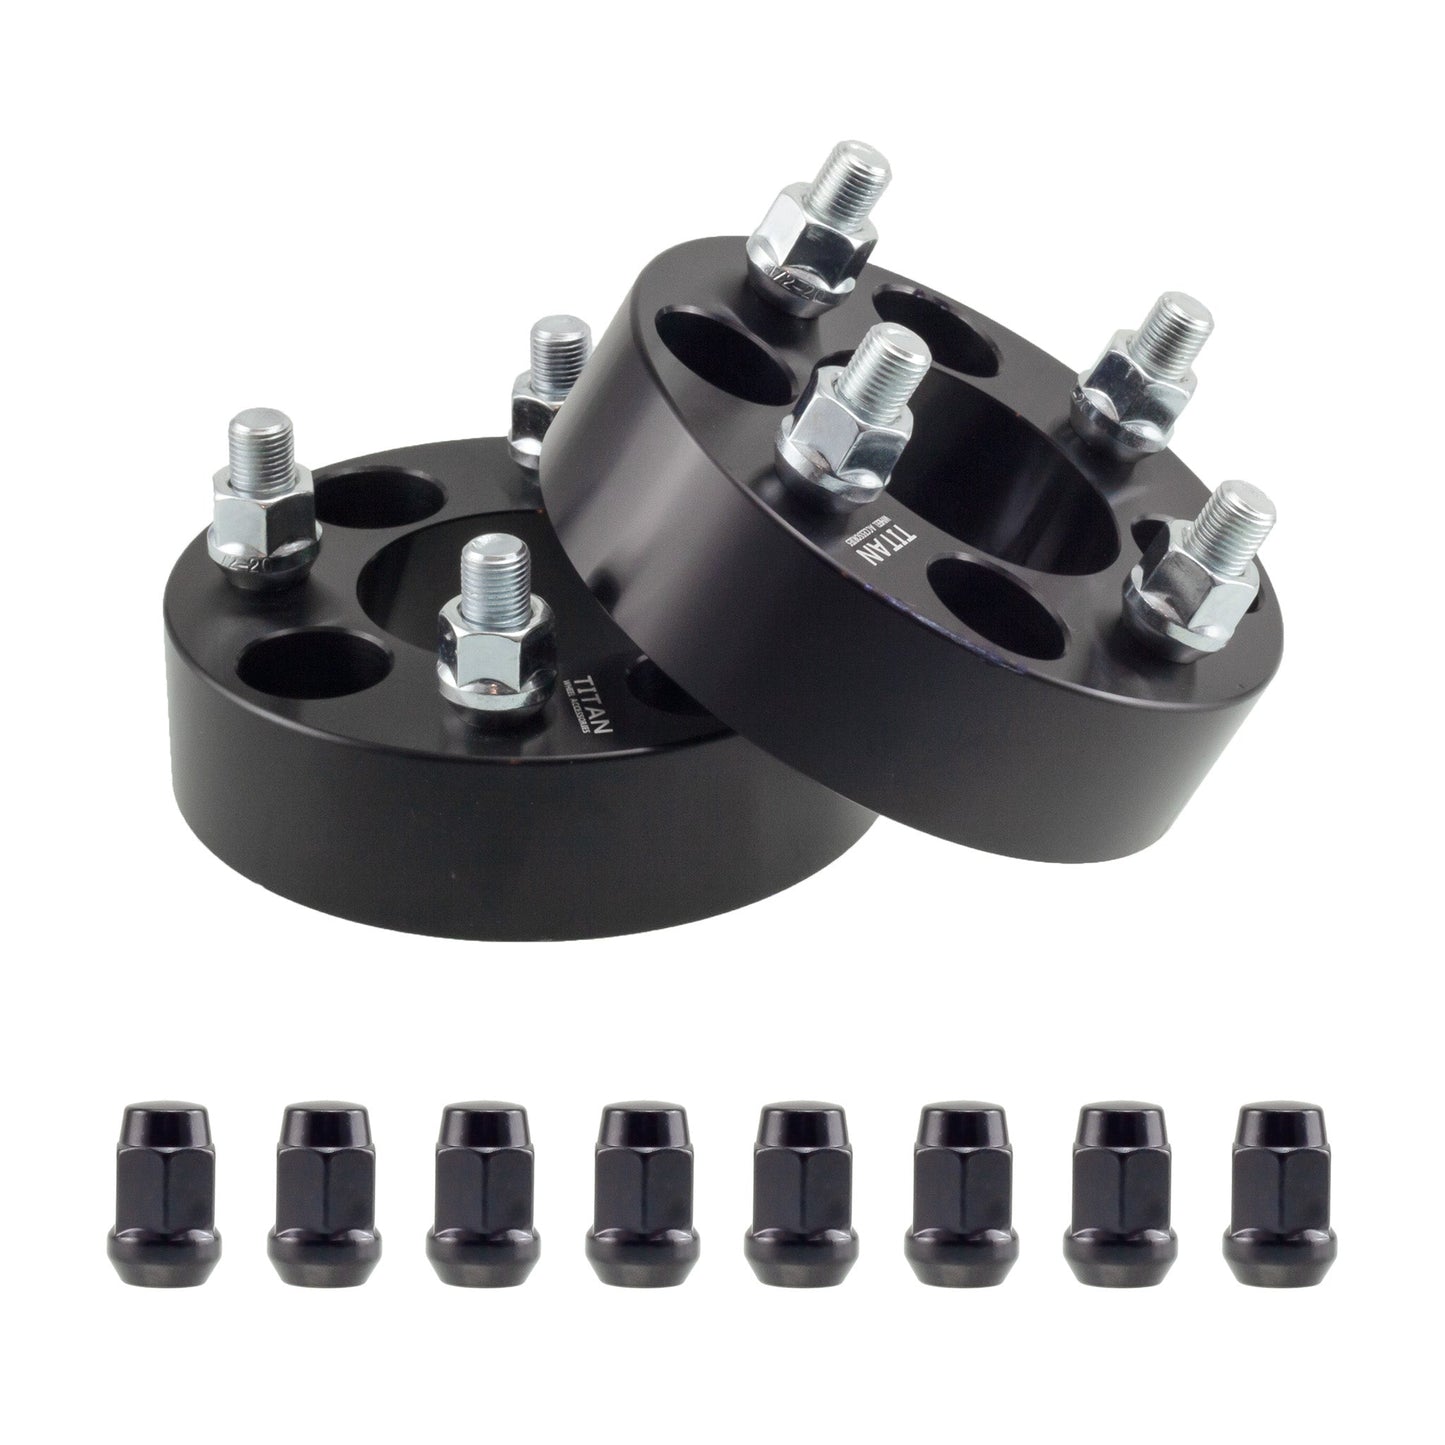 1" (25mm) Titan 4x100 to 4x108 Wheel Adapters for Acura Mazda | 12x1.5 Studs | Titan Wheel Accessories